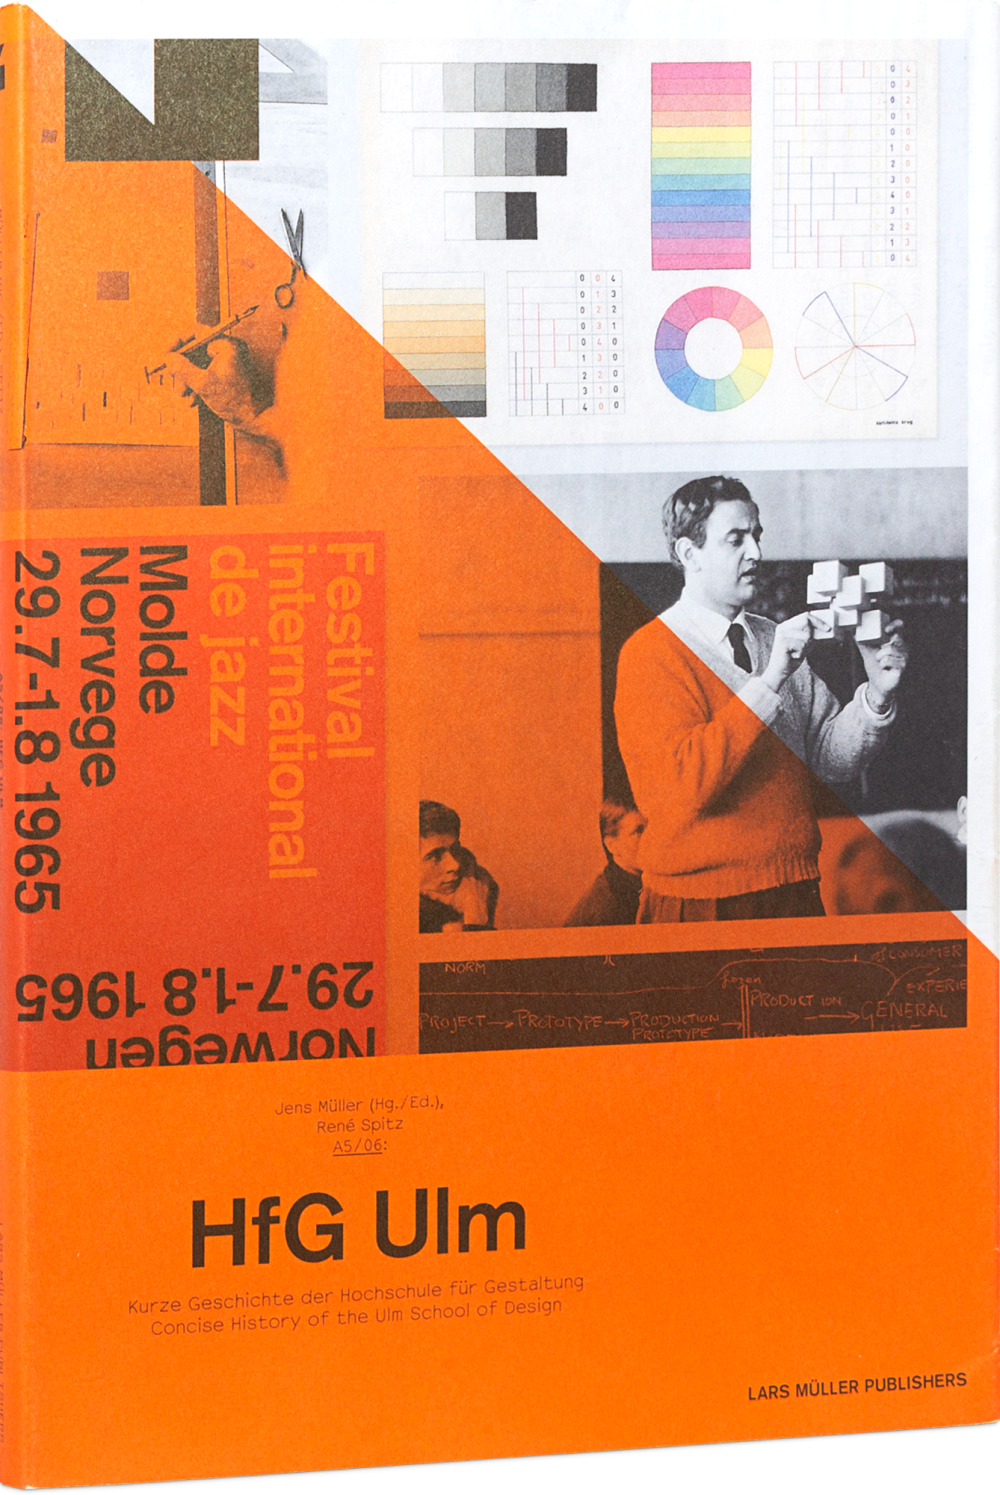 A5/06 HfG Ulm | Lars Müller Publishers